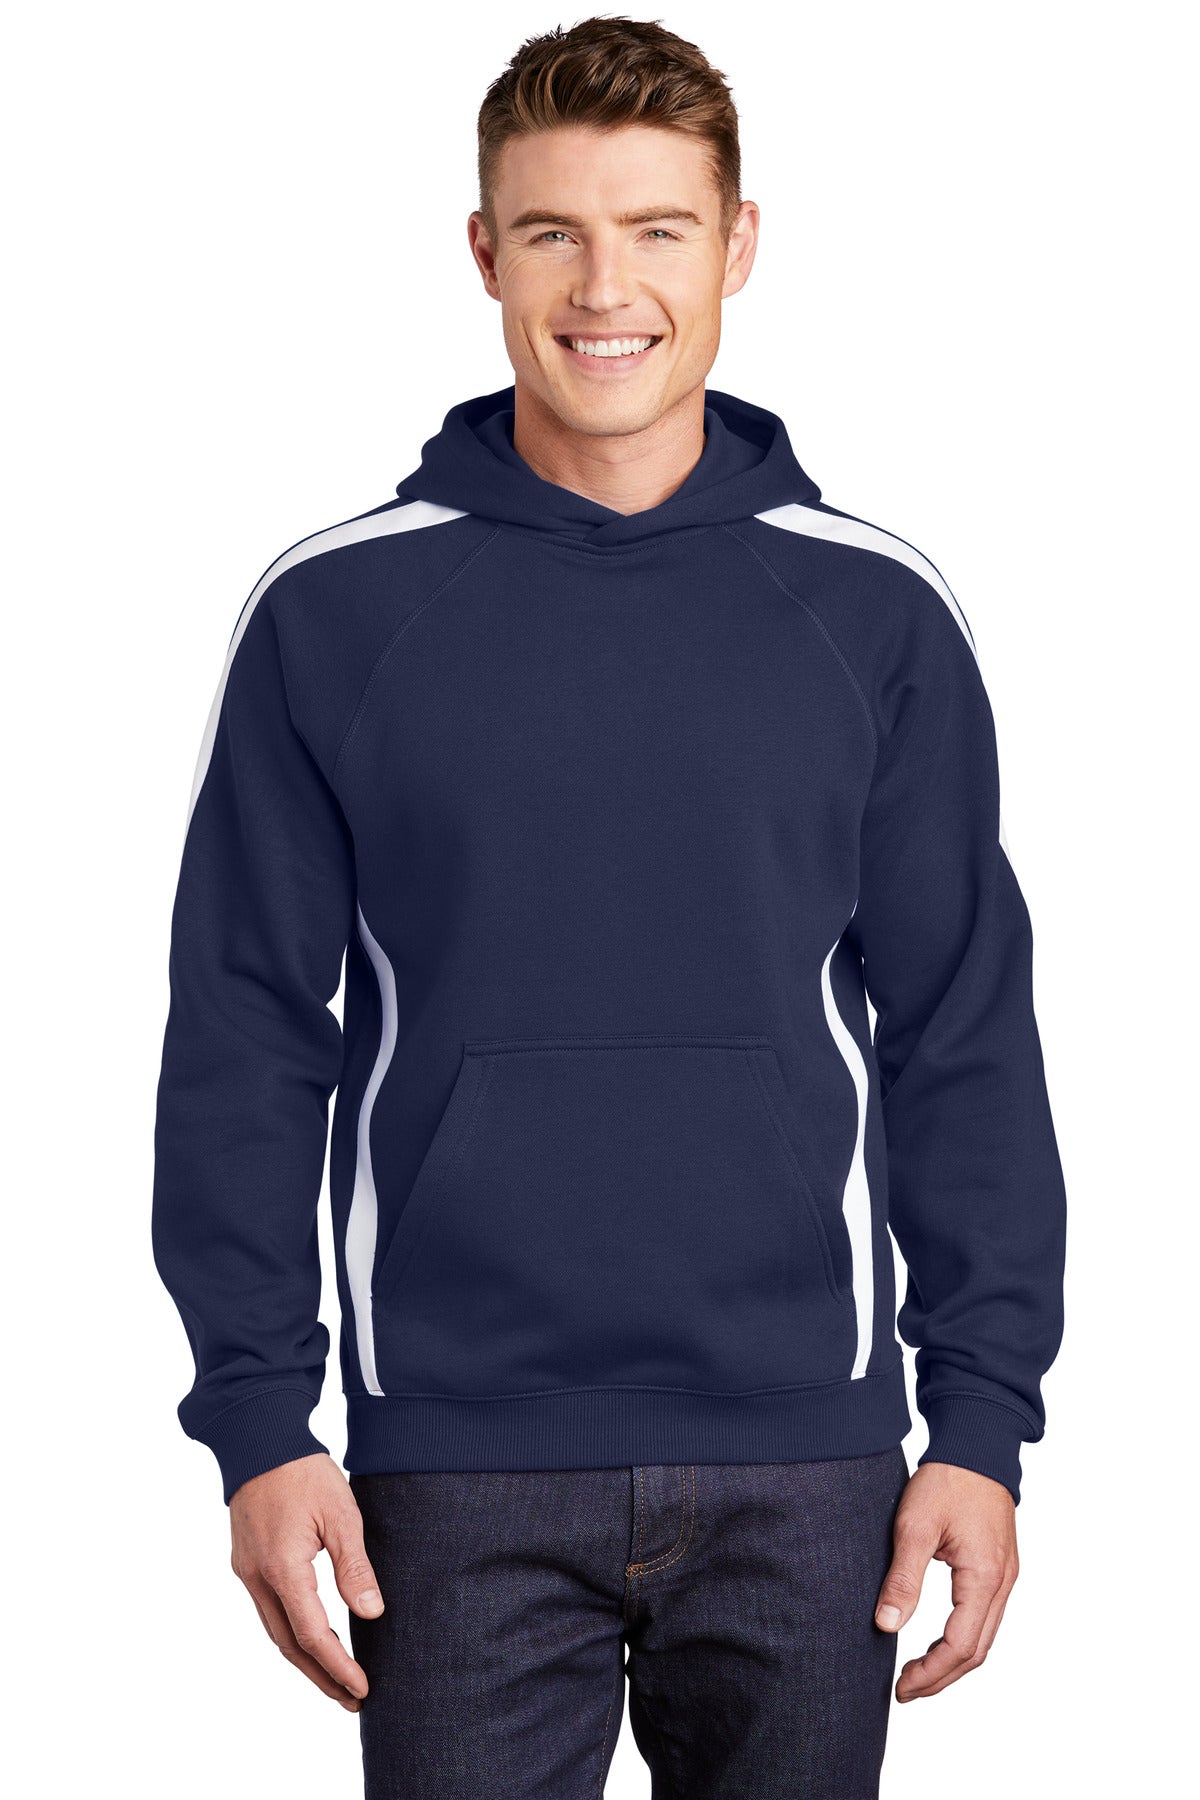 Sweatshirts/Fleece True Navy/ White Sport-Tek